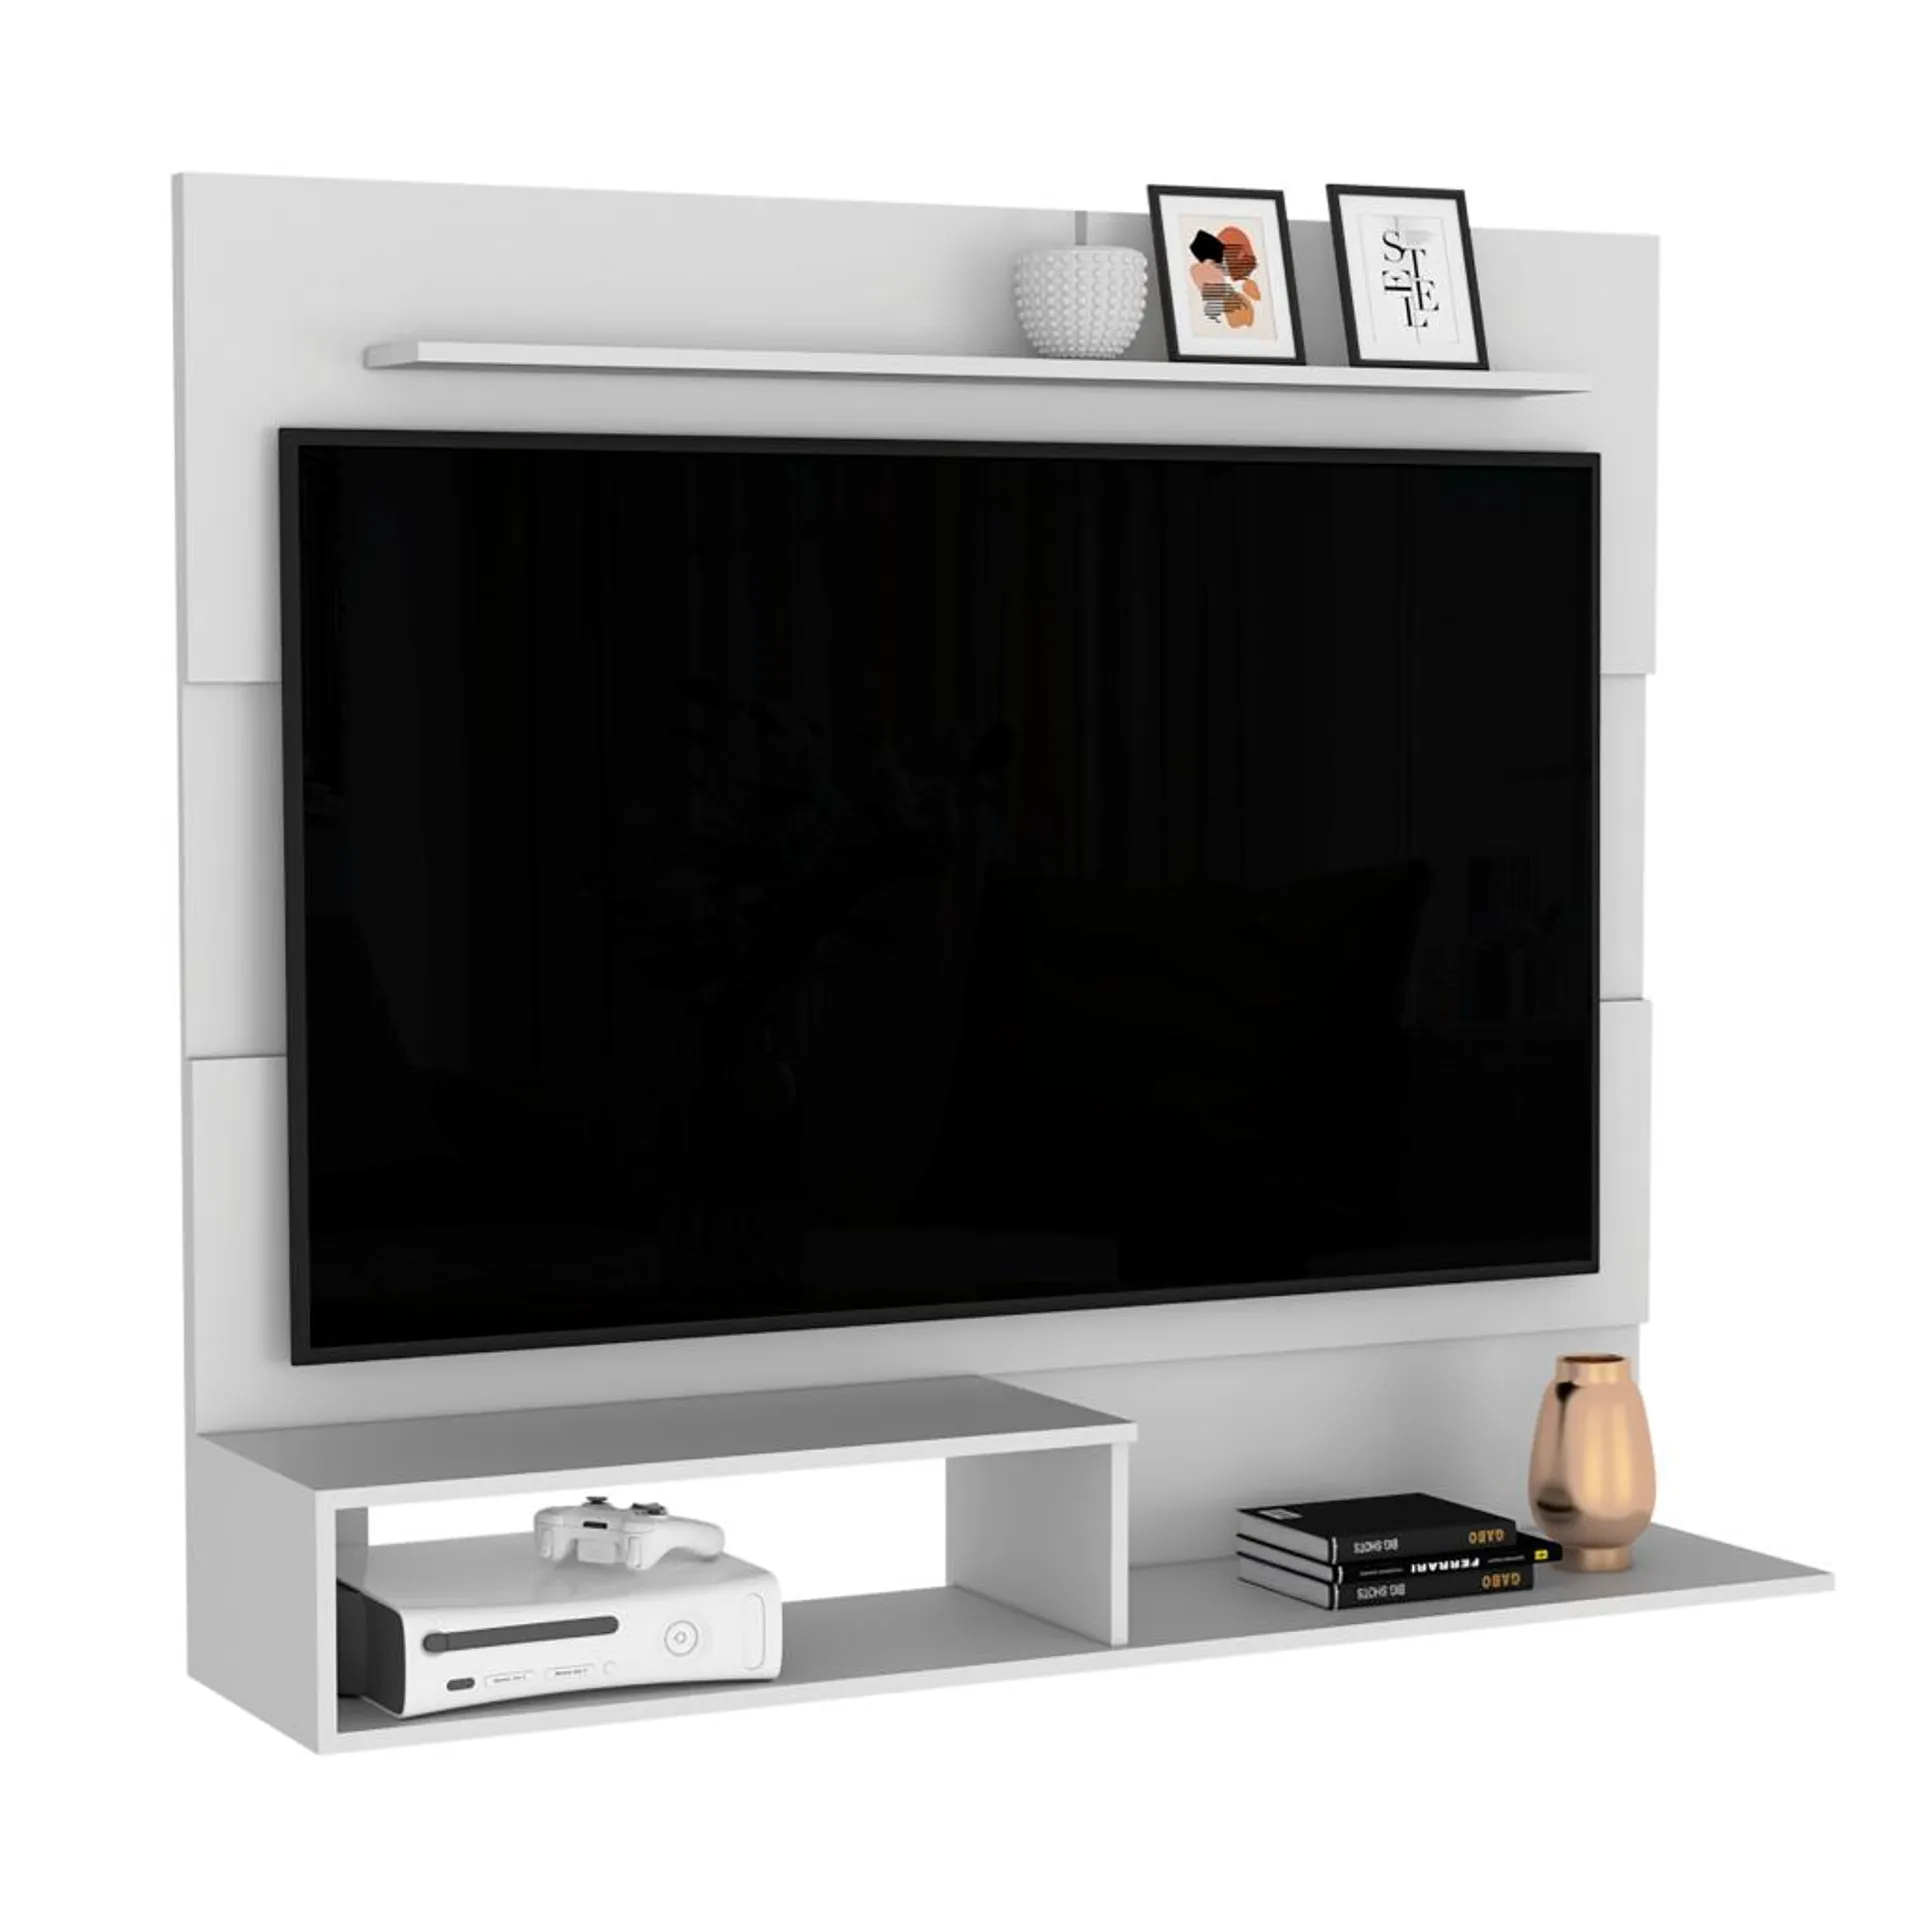 Panel de tv ascher, blanco, con espacio para televisor de hasta 55 pulgadas